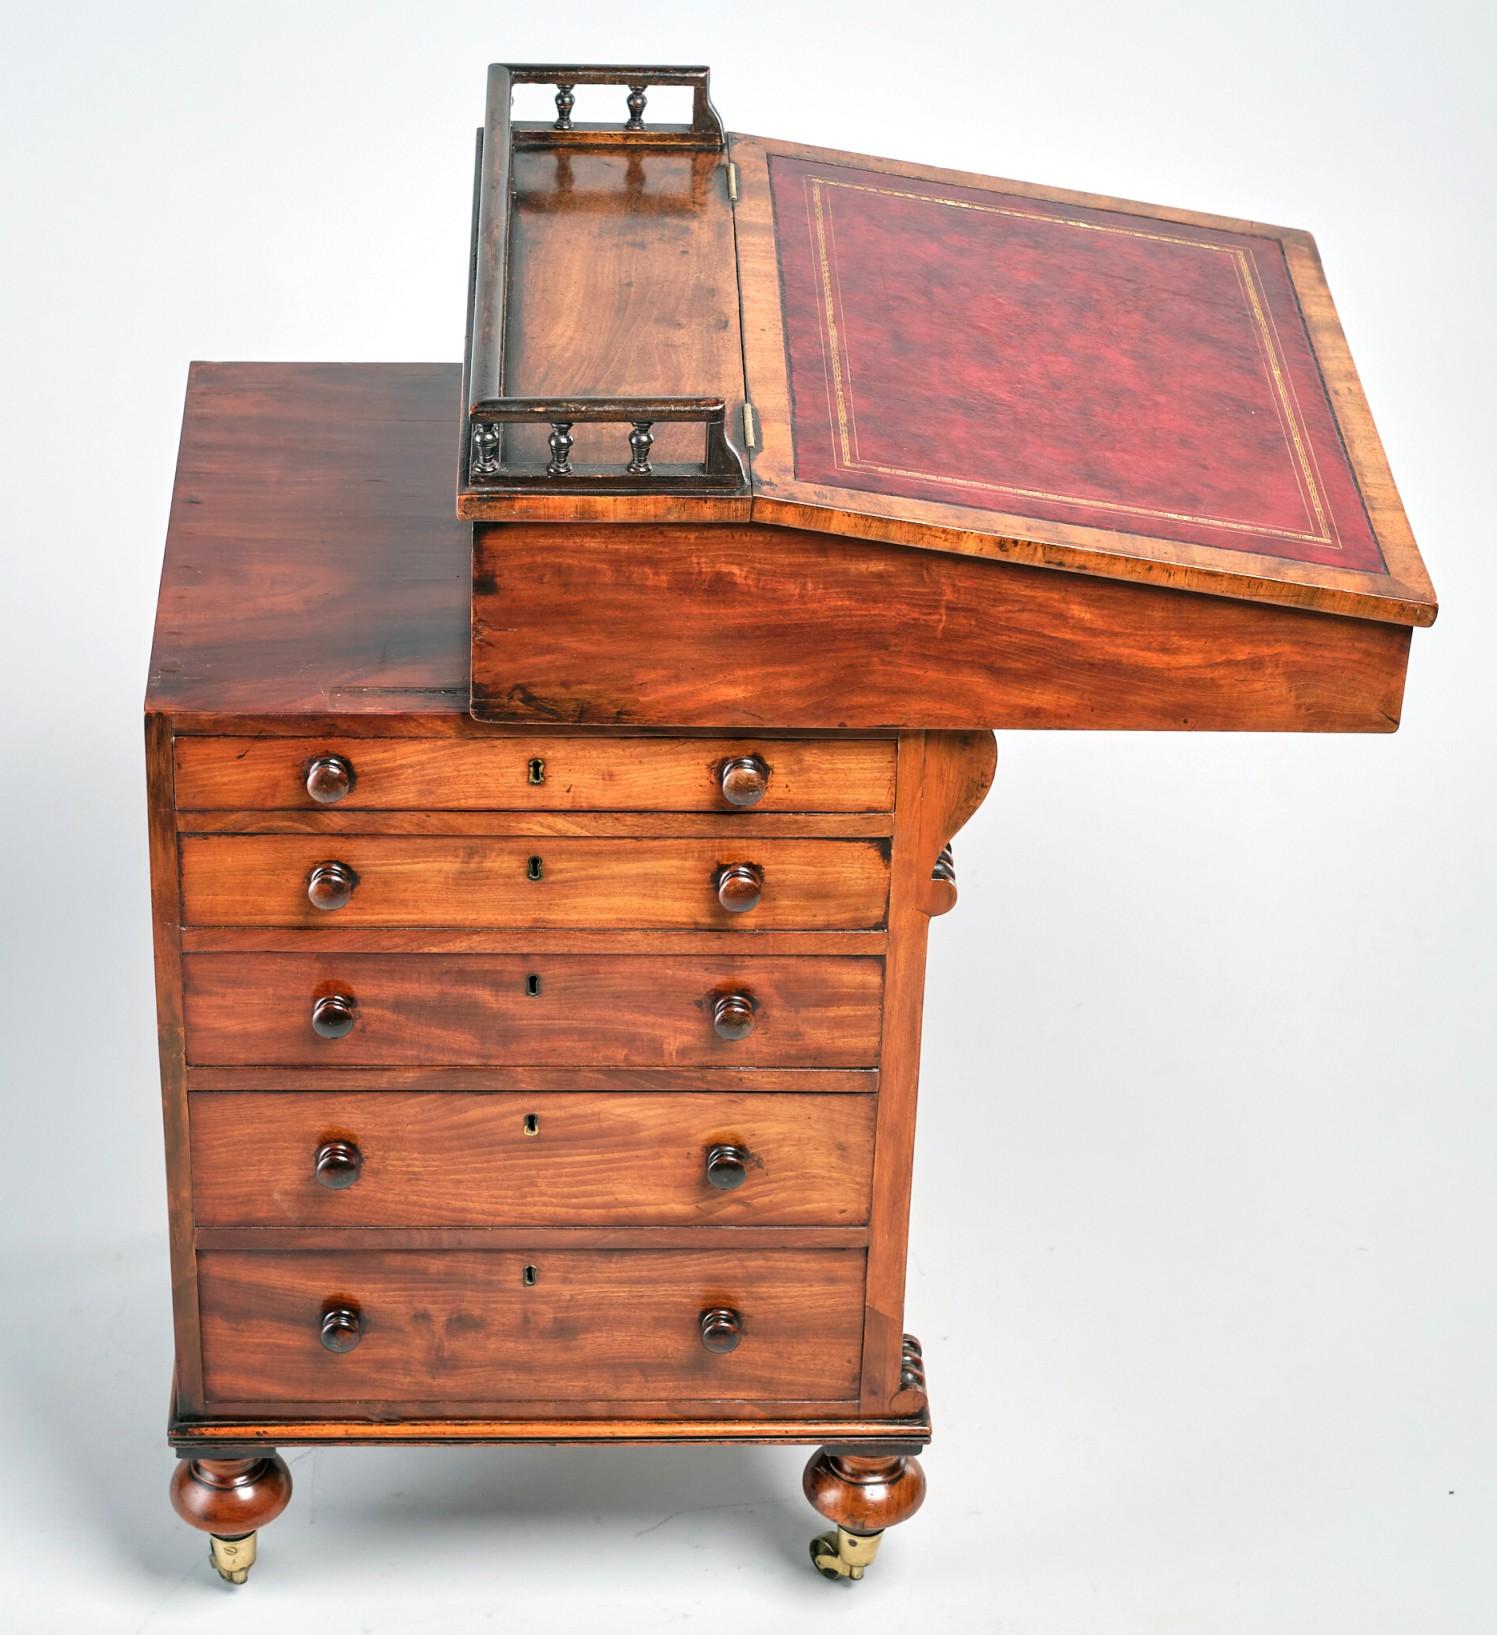 A Superior English Regency Period Davenport Desk in Figured Mahogany, Circa 1830 For Sale 7